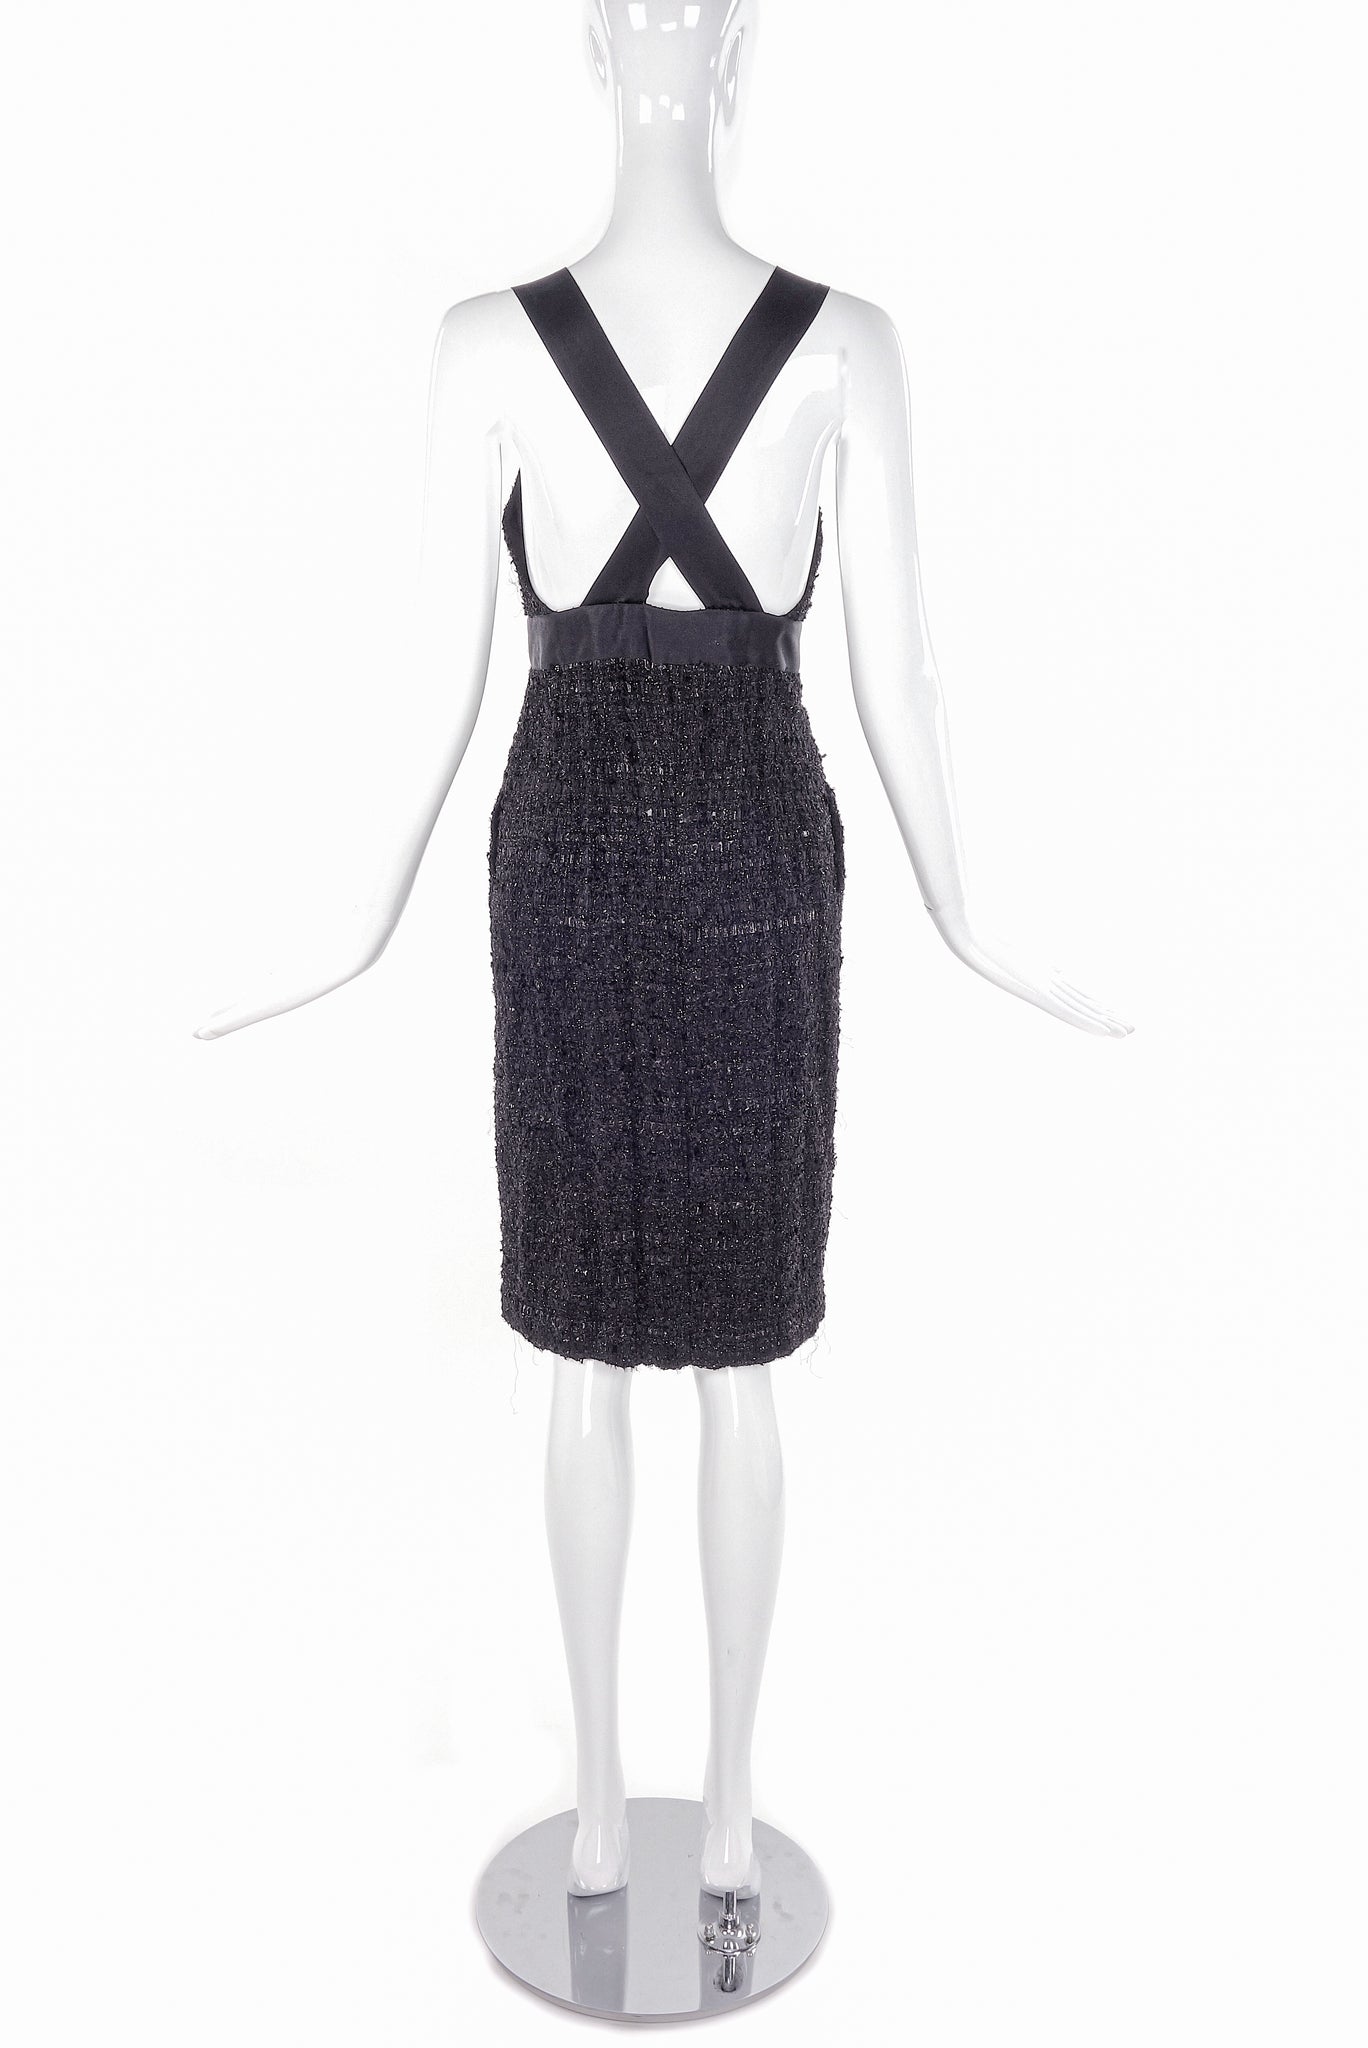 Chanel Classic Little Black Dress Lurex Boucle Dress Fall 2007 Runwa –  PauméLosAngeles